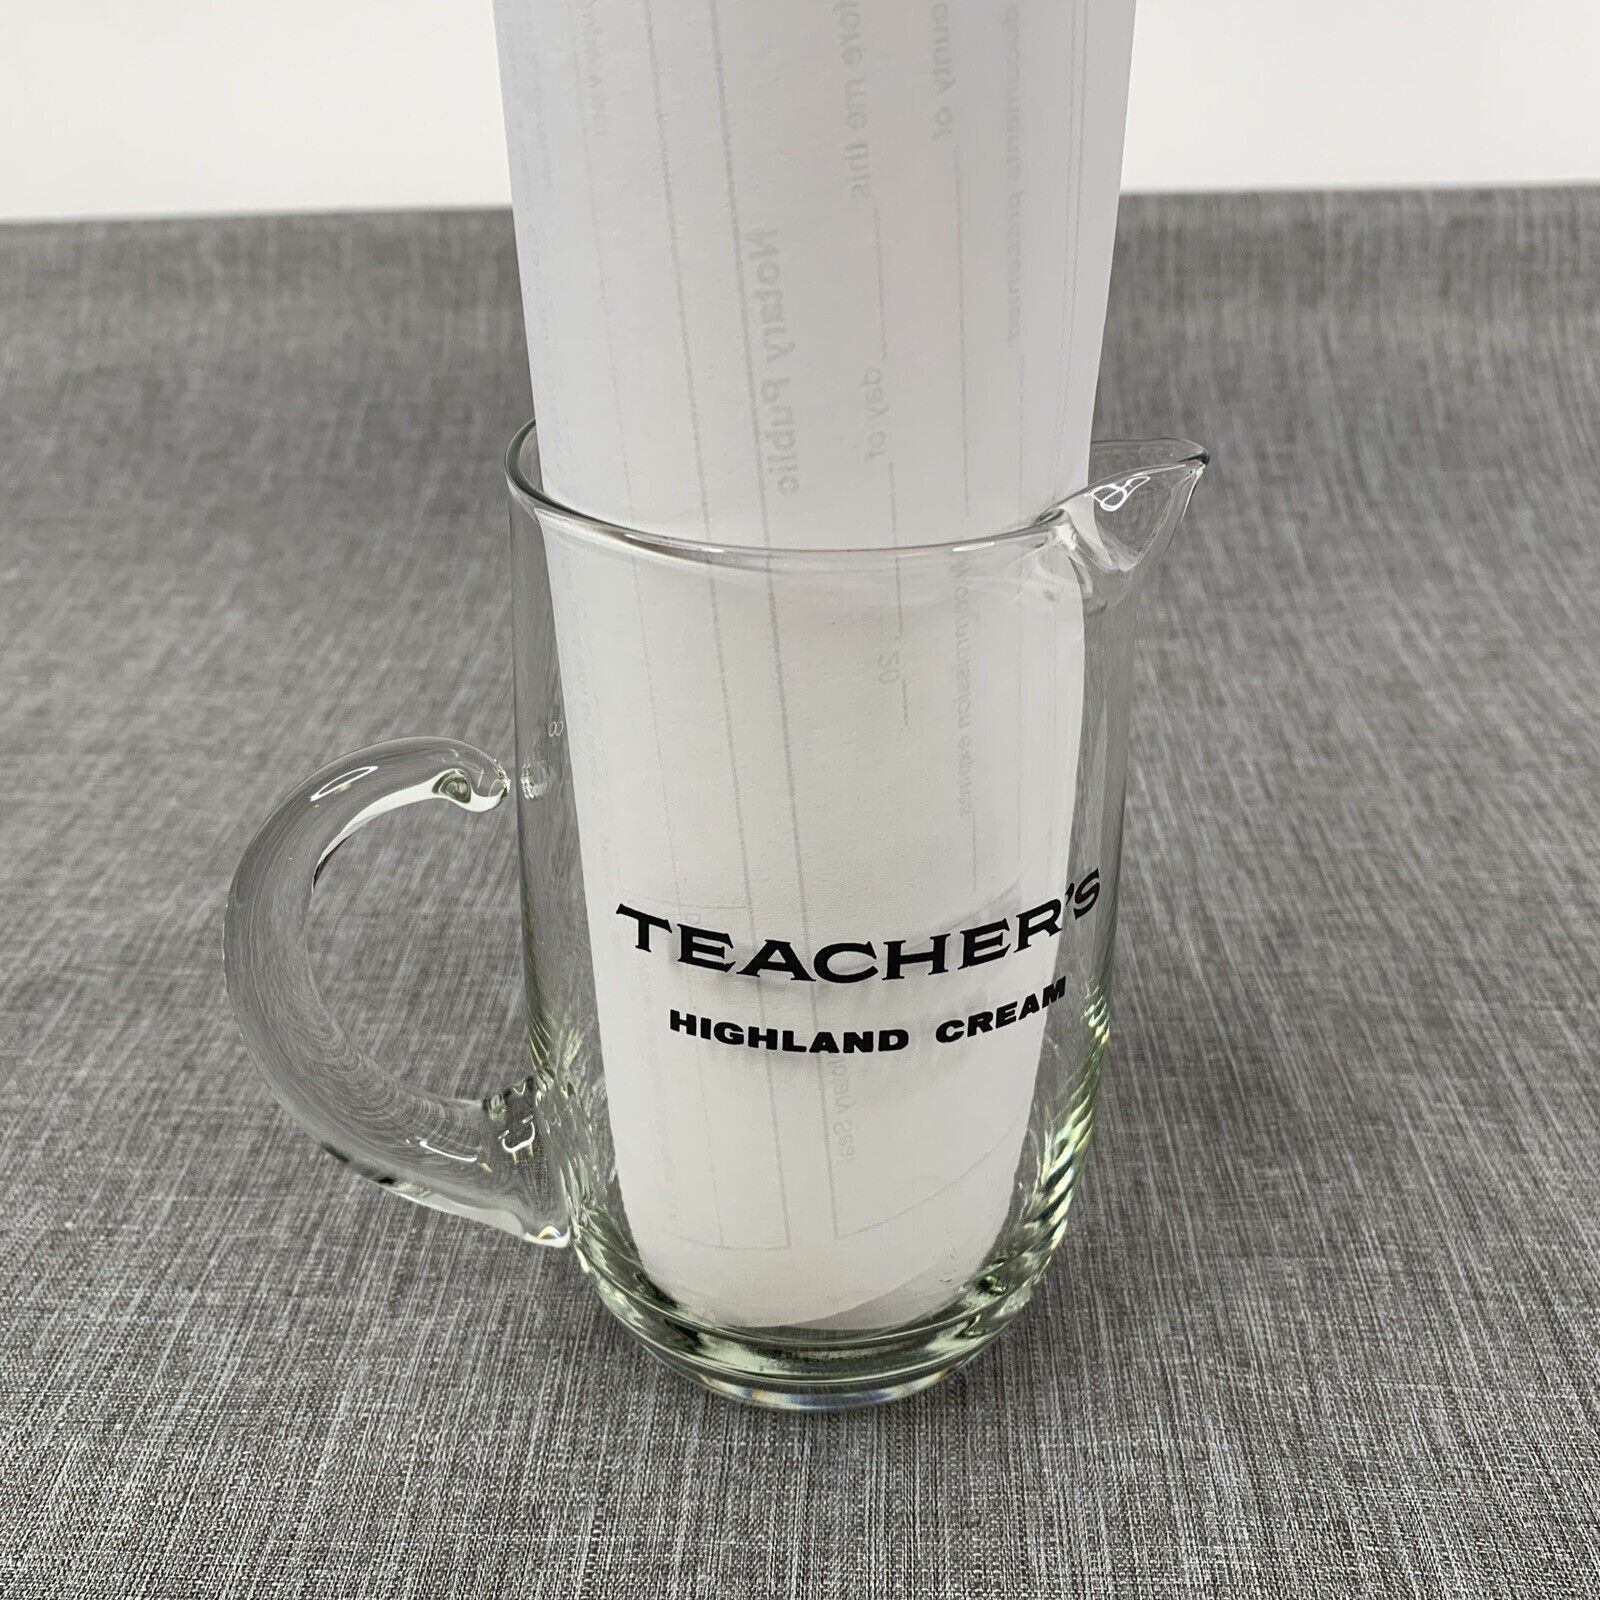 VTG Teacher\'s Highland Cream Glass Pitcher Pub Jug Advertising Barware